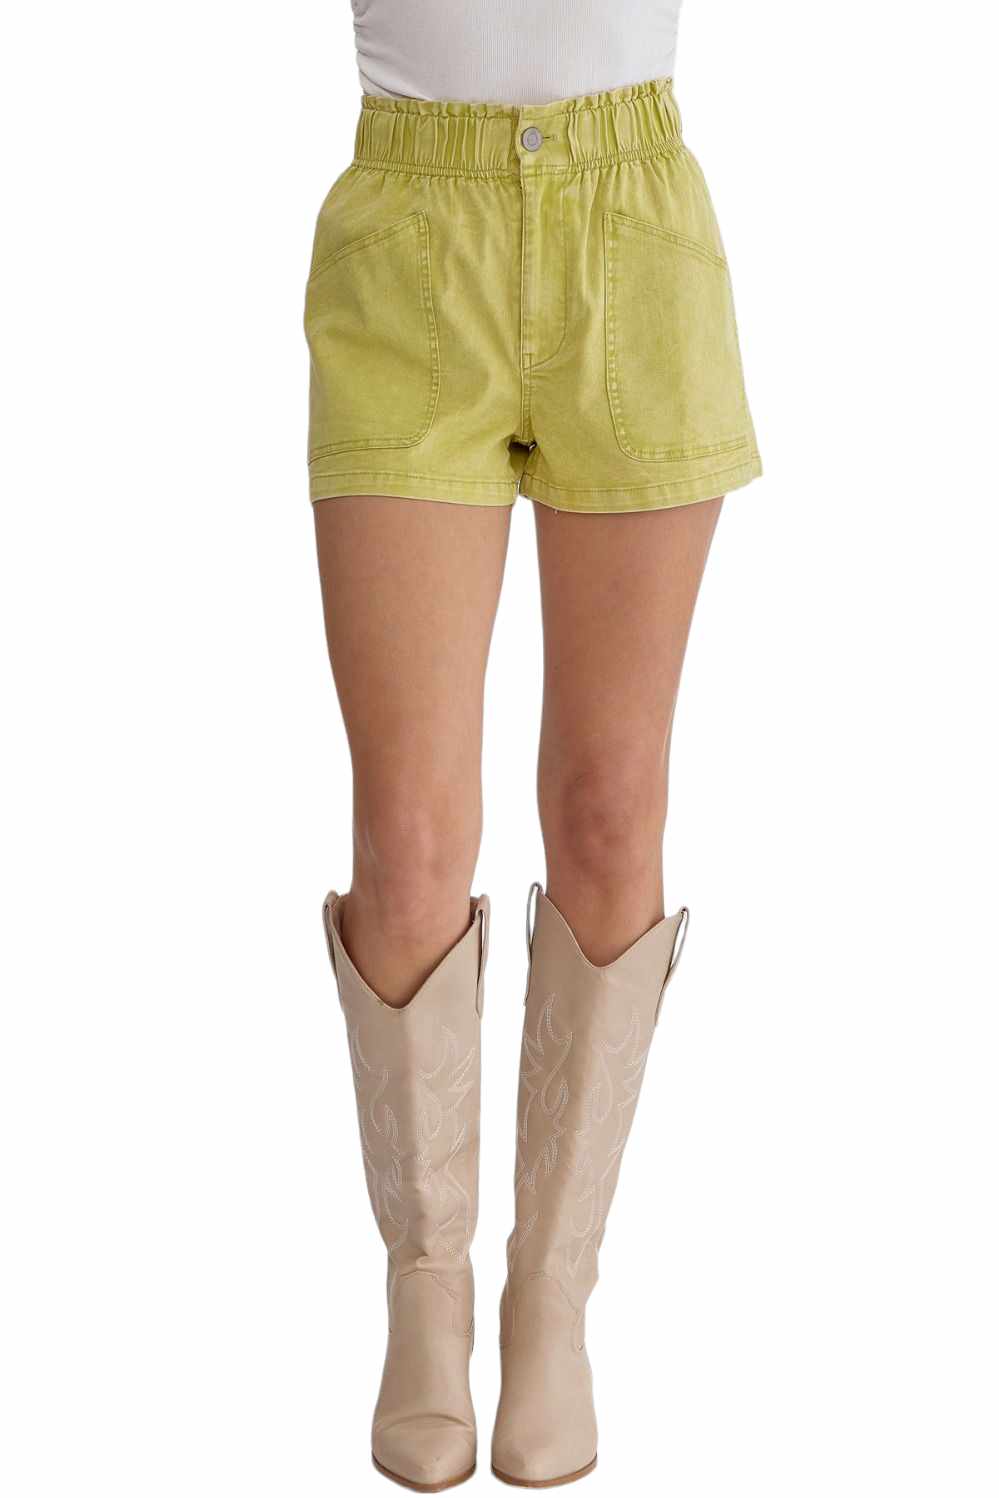 Stay Original Denim Spring Green Shorts